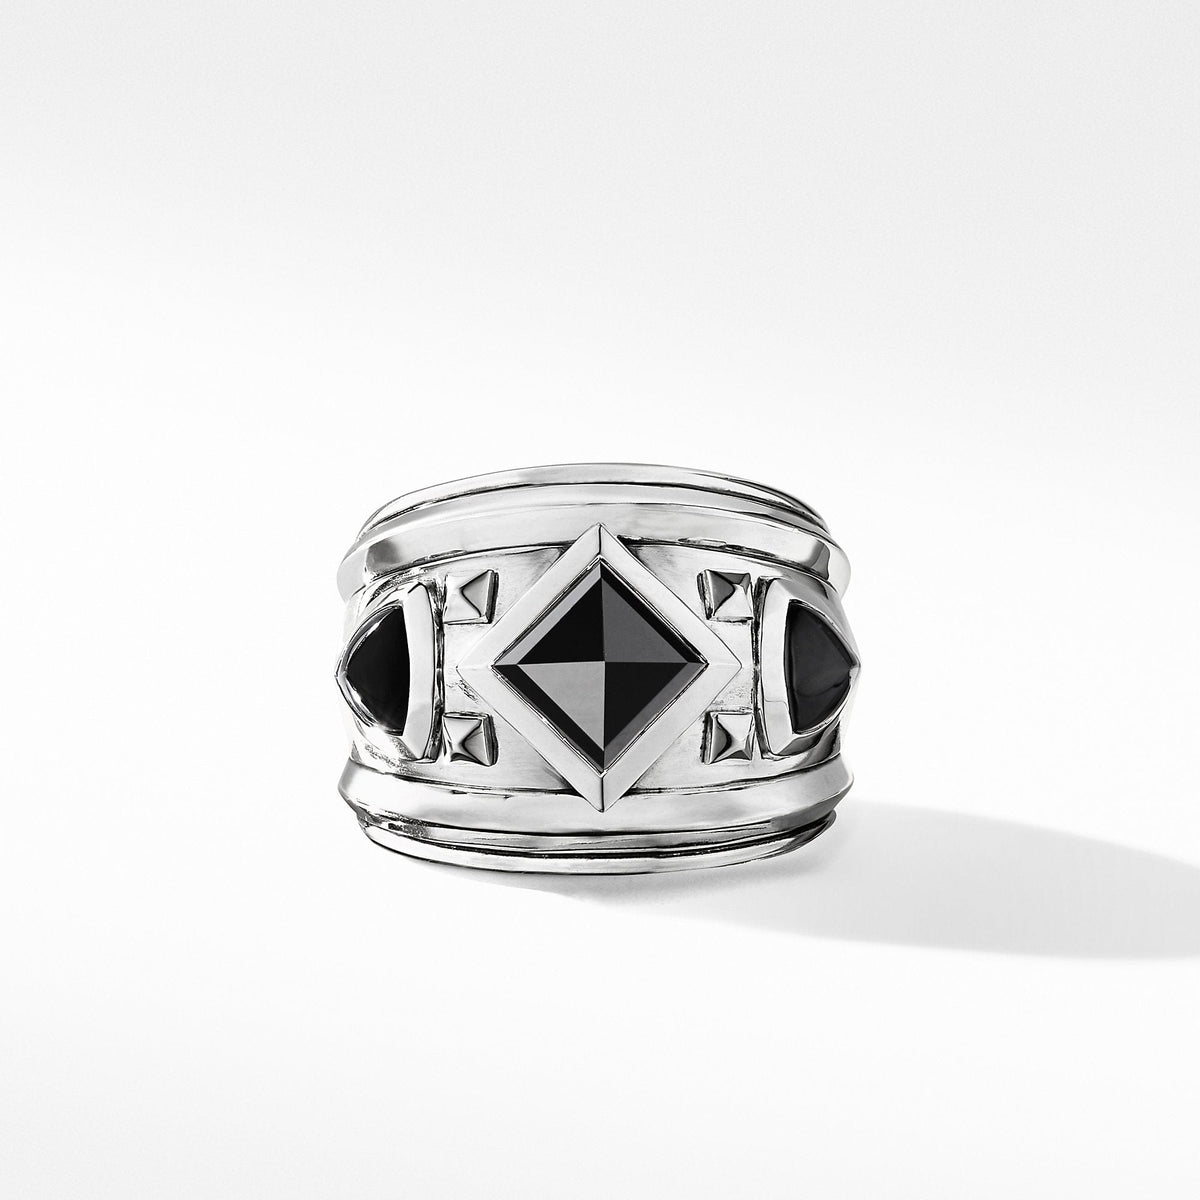 Renaissance Ring with Black Onyx